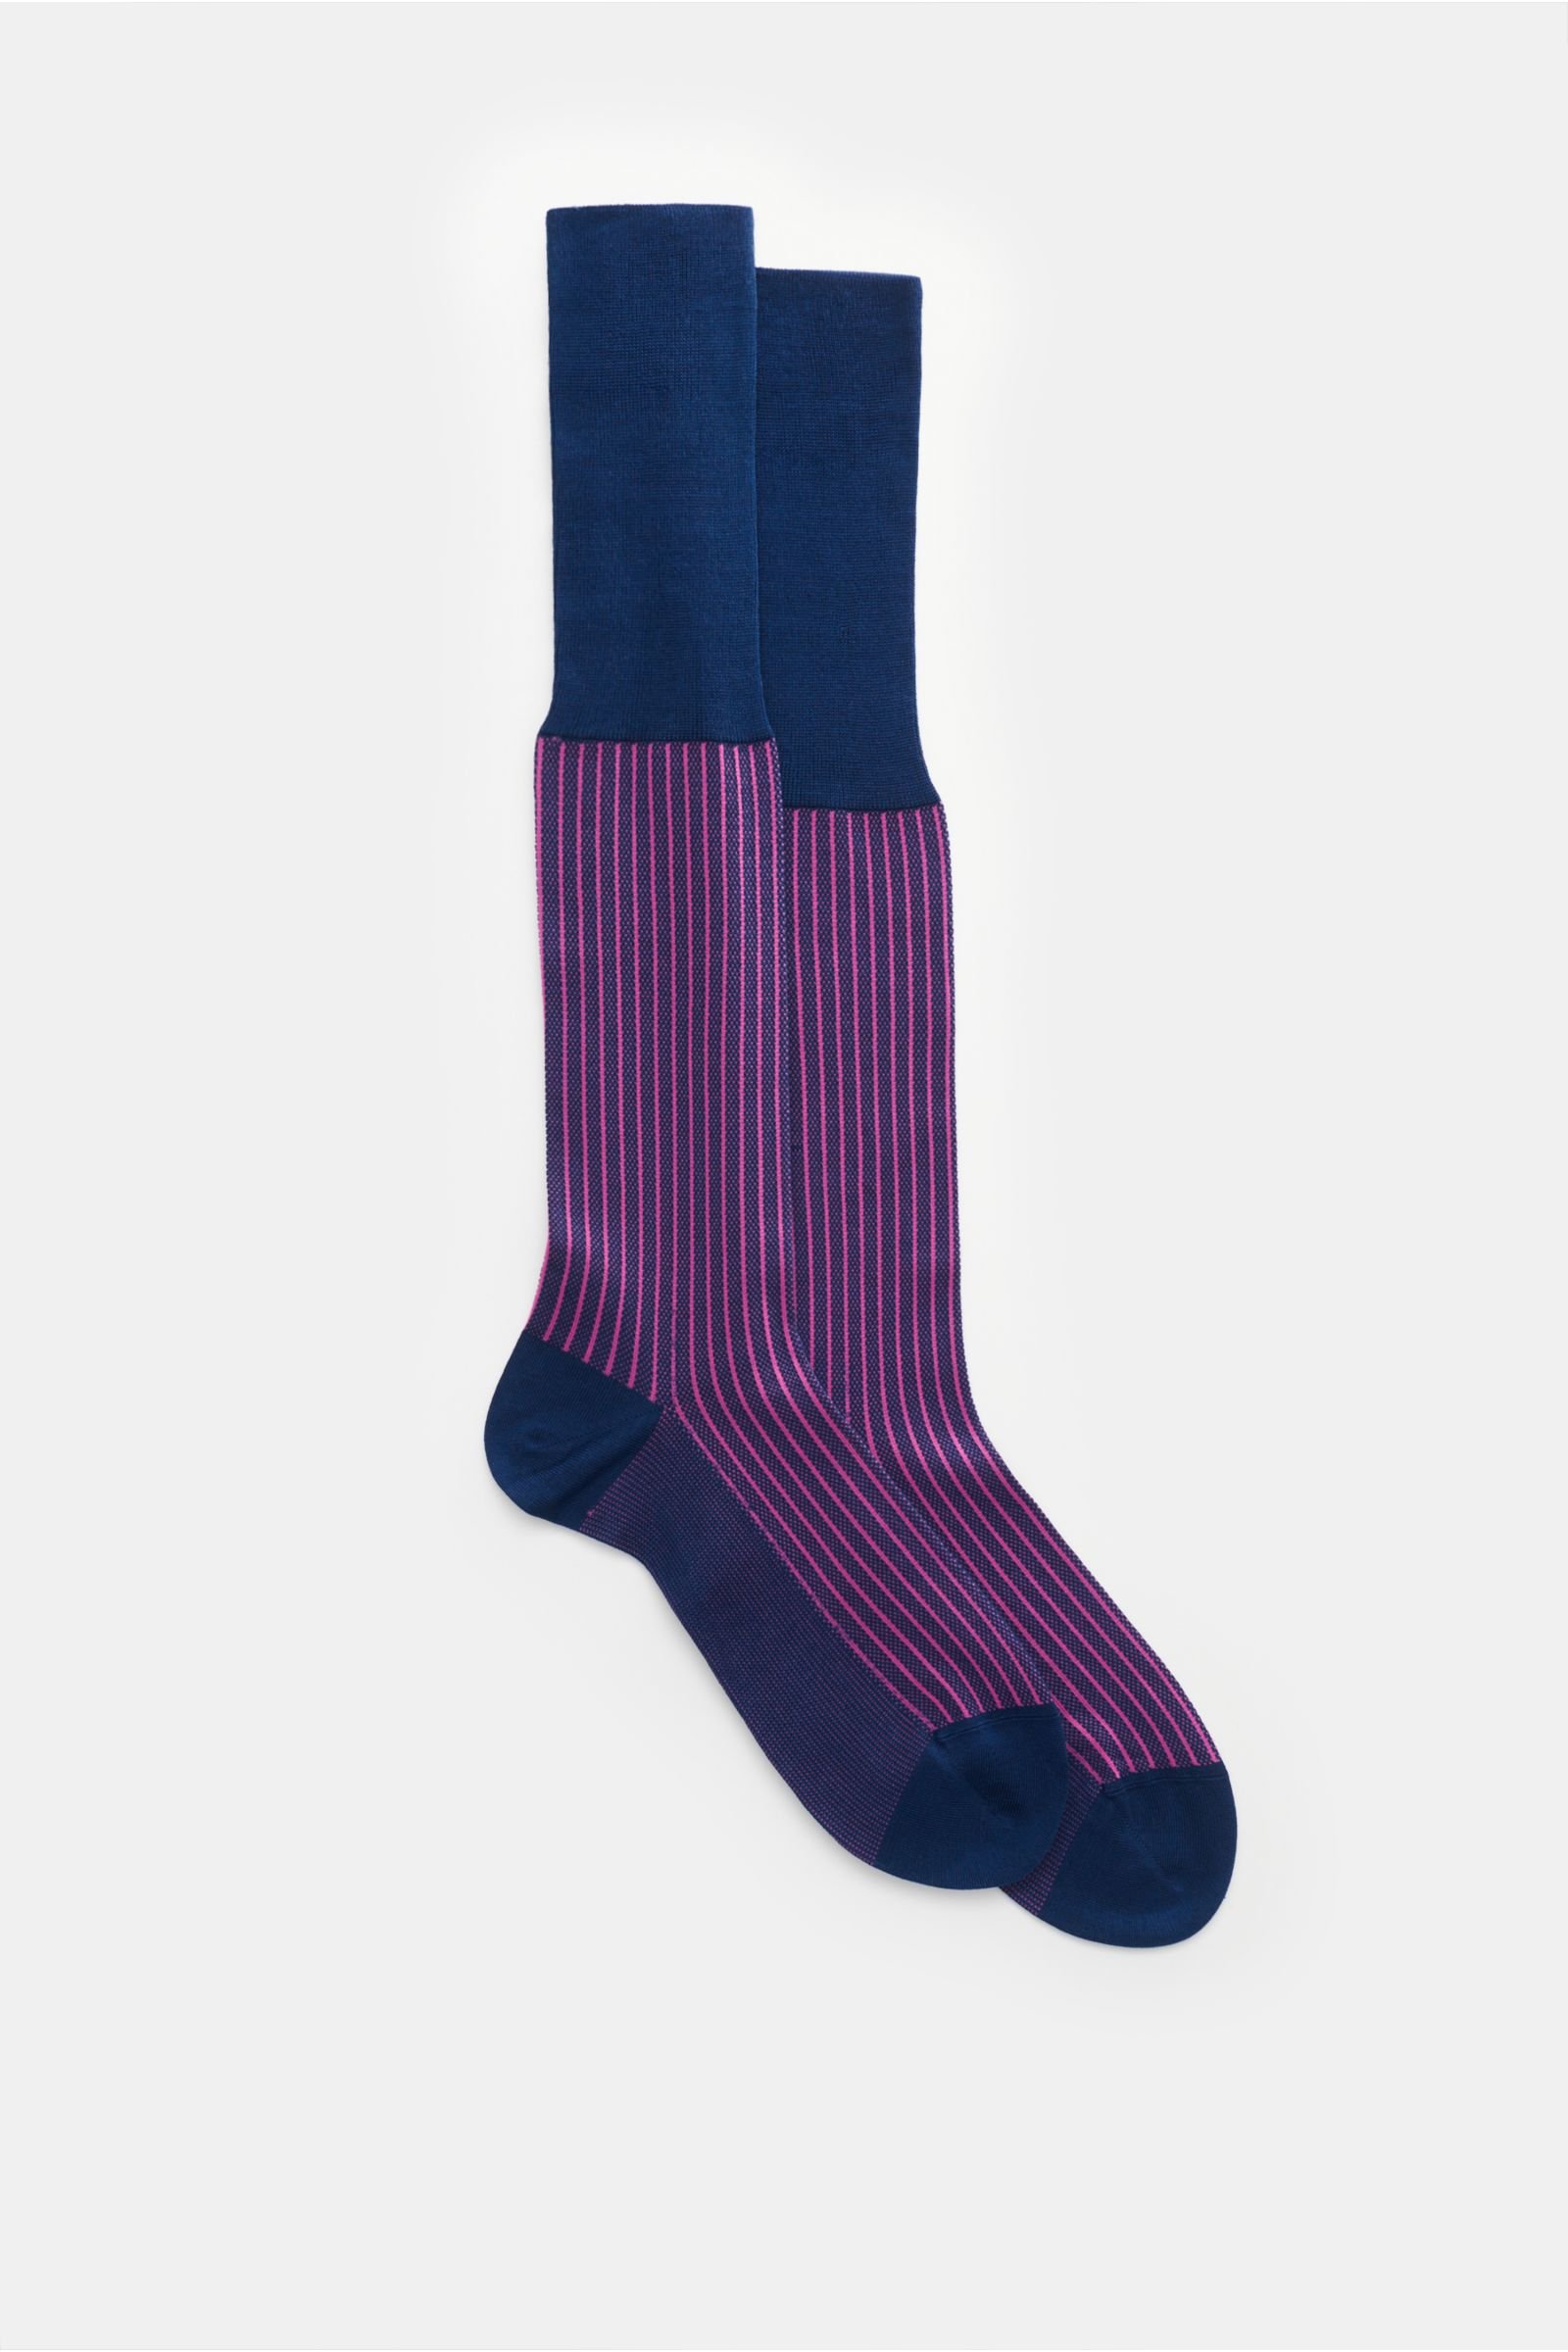 Knee high socks 'Oxford Stripe' navy/magenta striped